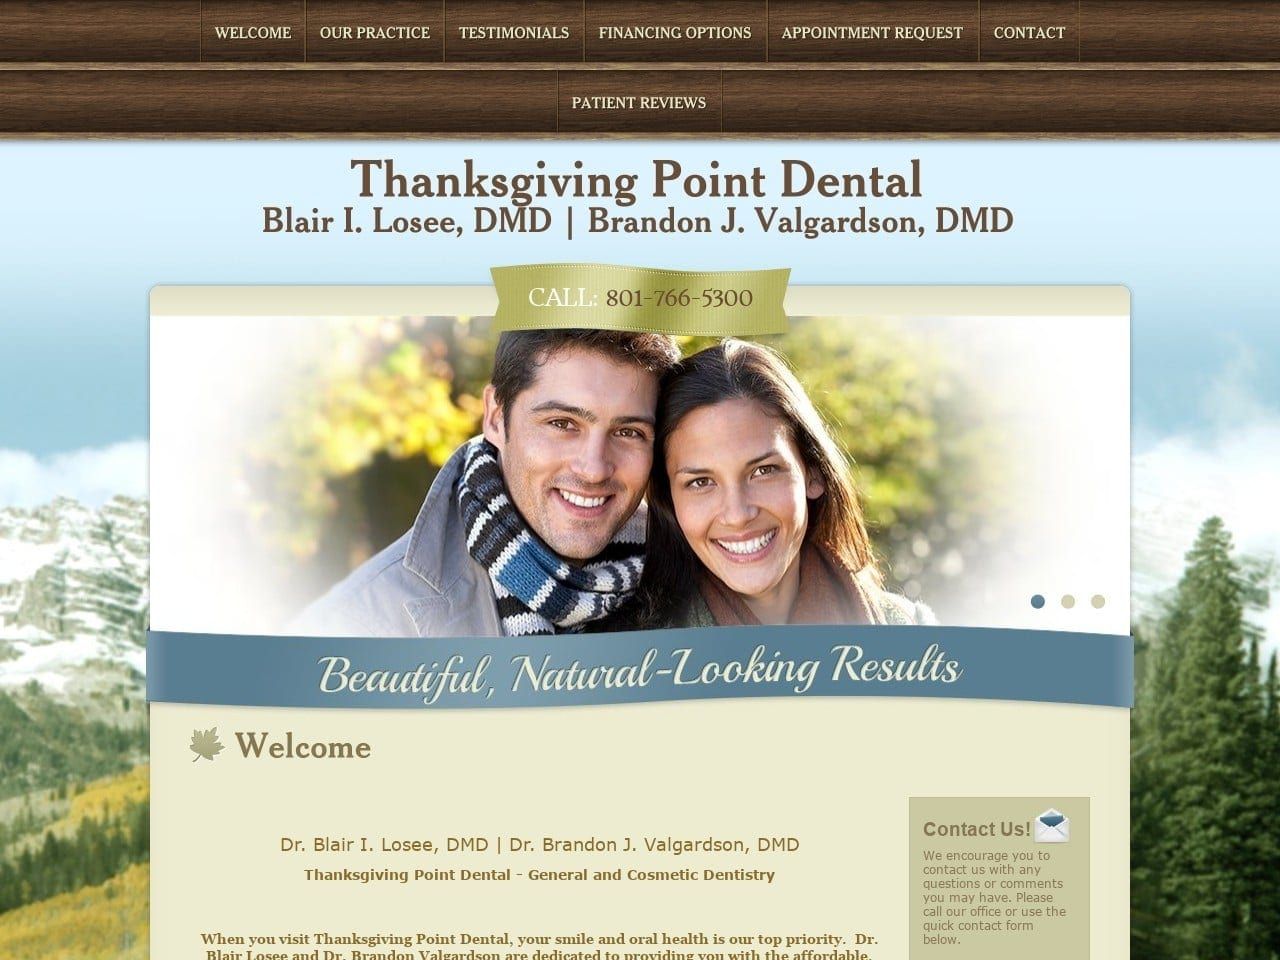 Thanksgivingpoint Dental Website Screenshot from thanksgivingpointdental.com